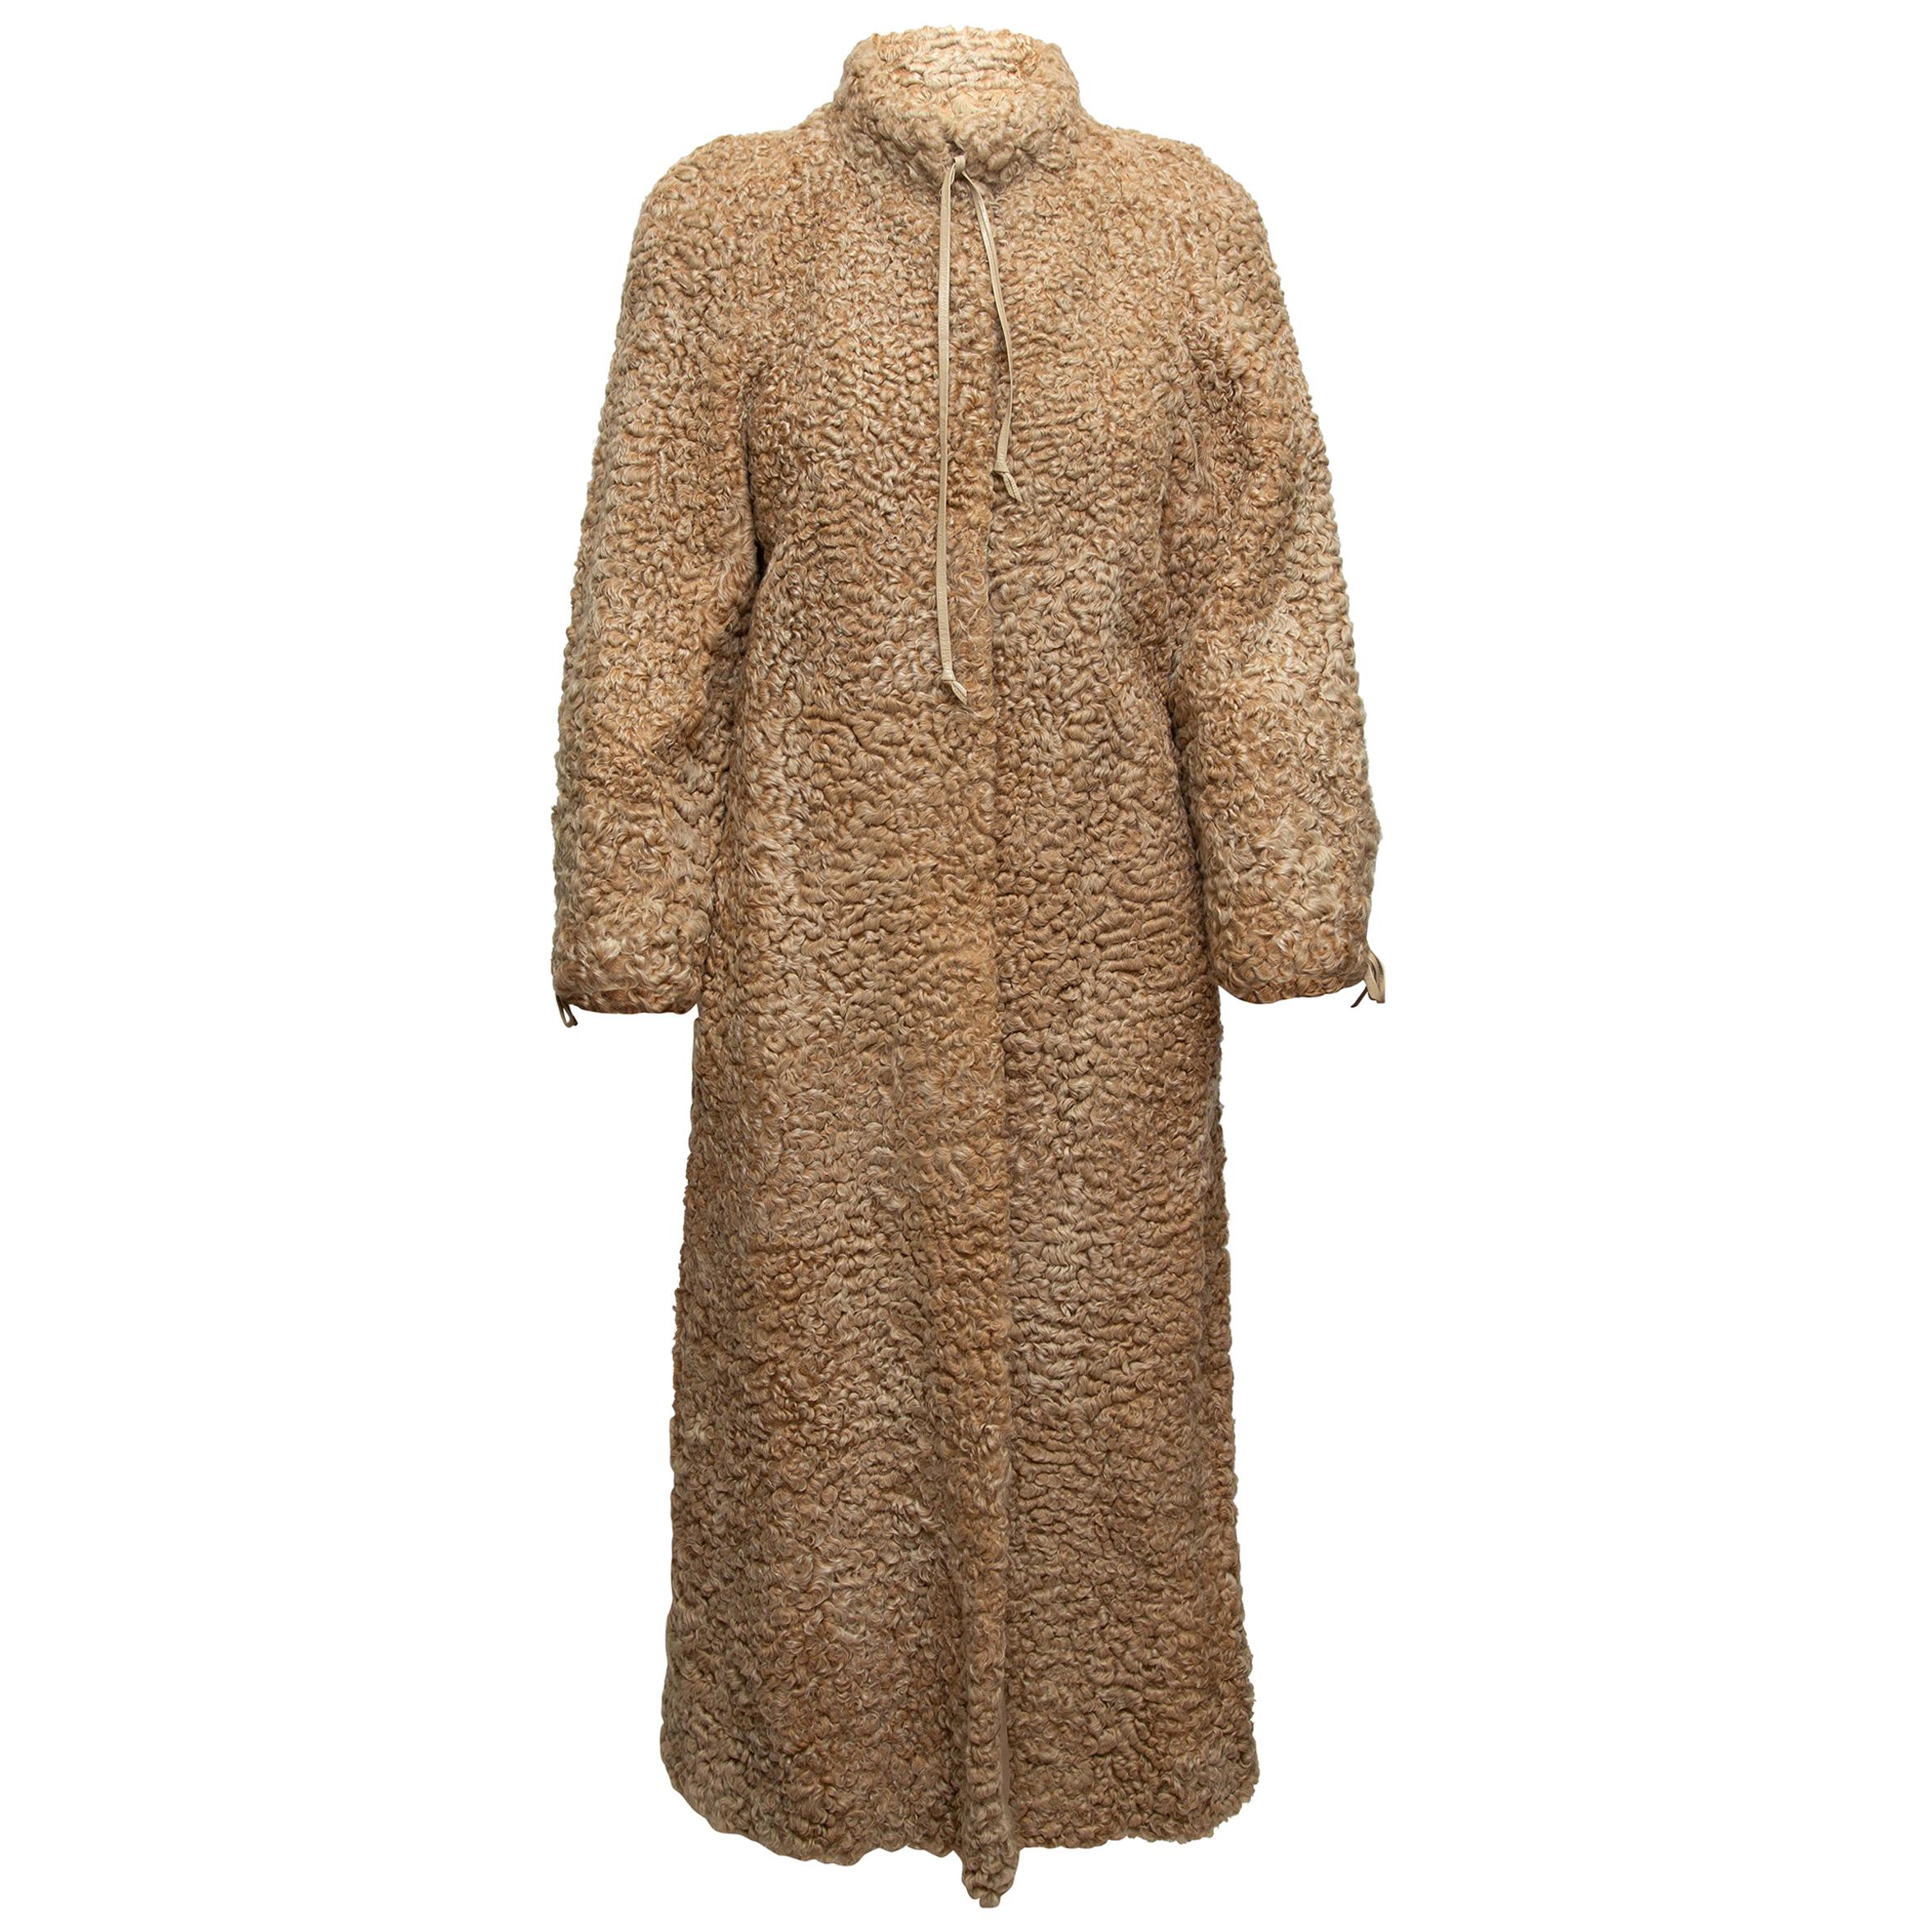 Grosvenor Beige Persian Lamb Long Coat